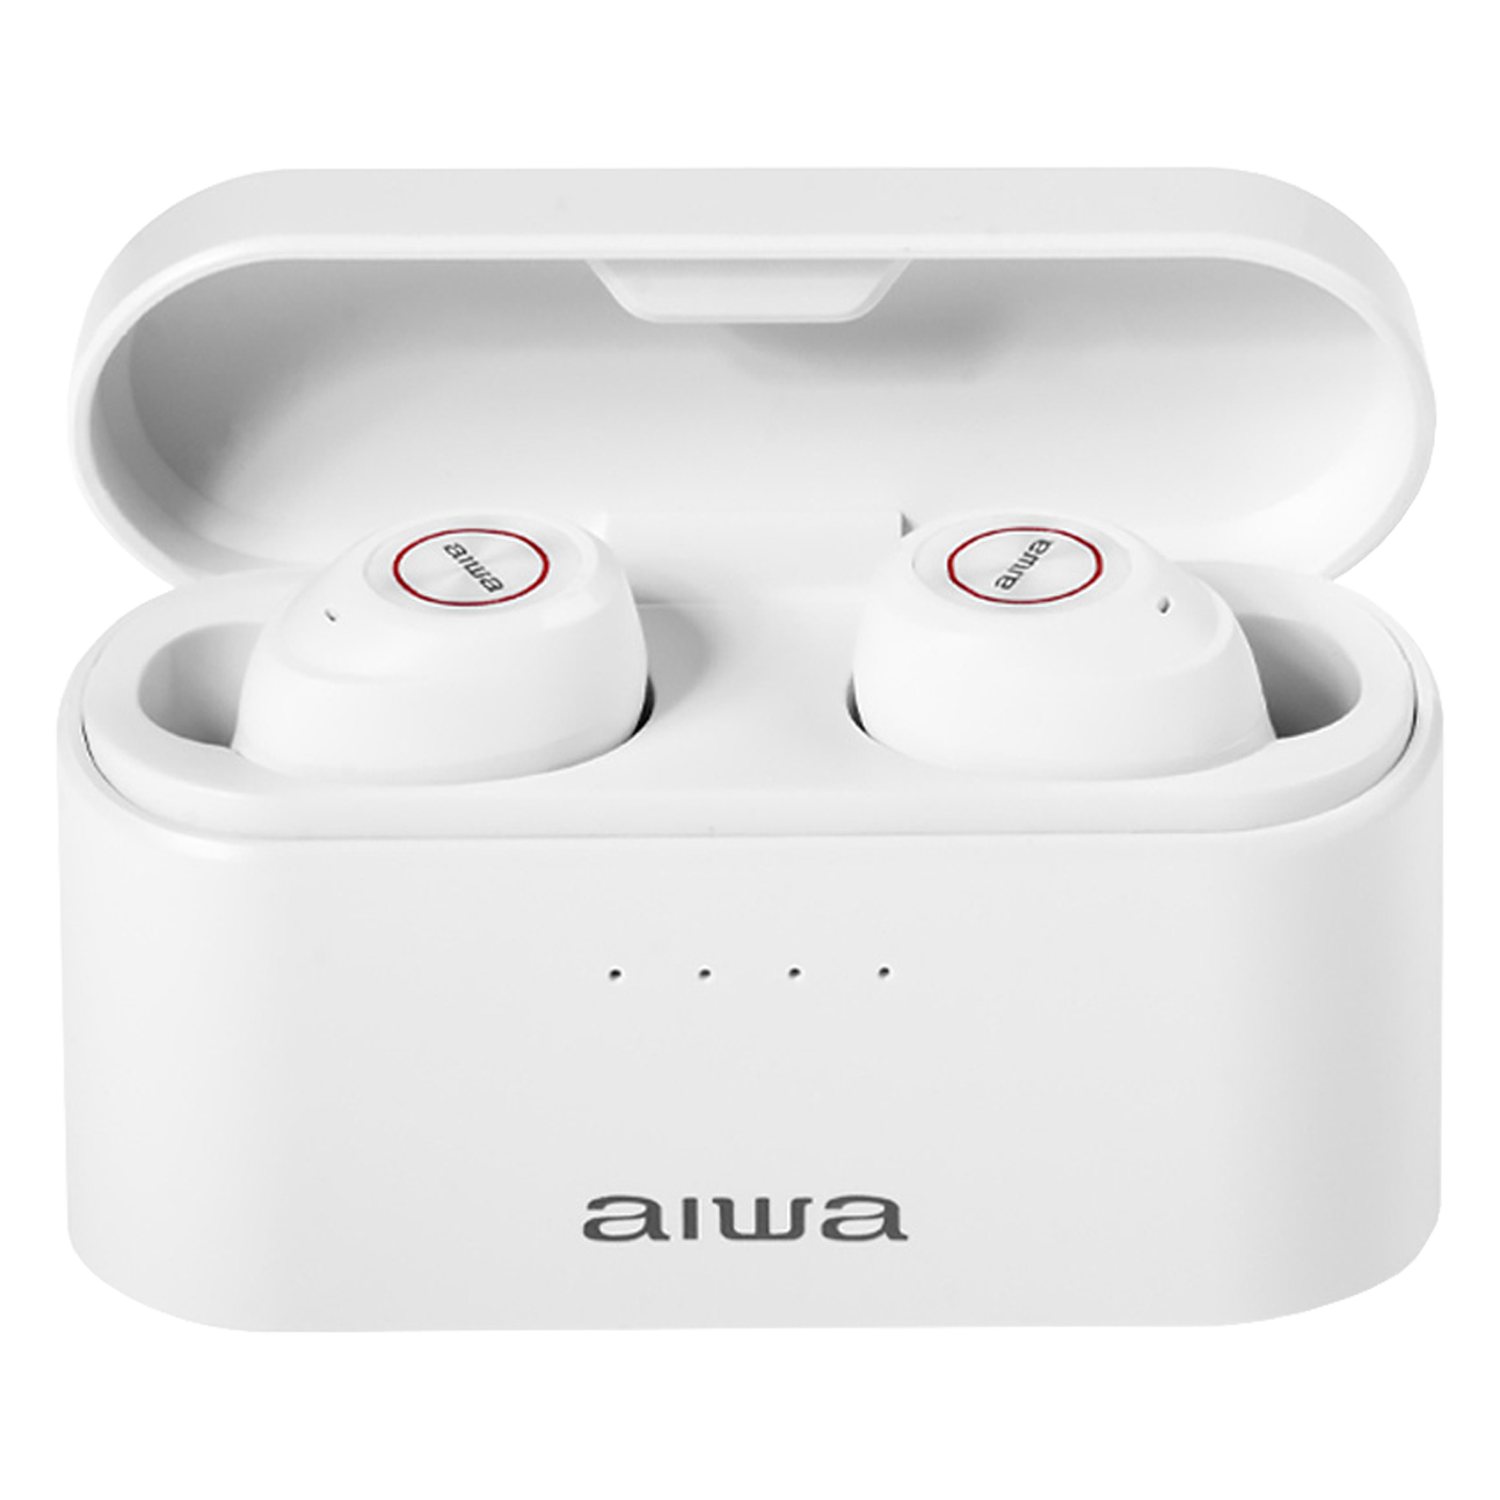 Fone de Ouvido Aiwa AW-6 Pro Bluetooth / com Microfone - Branco